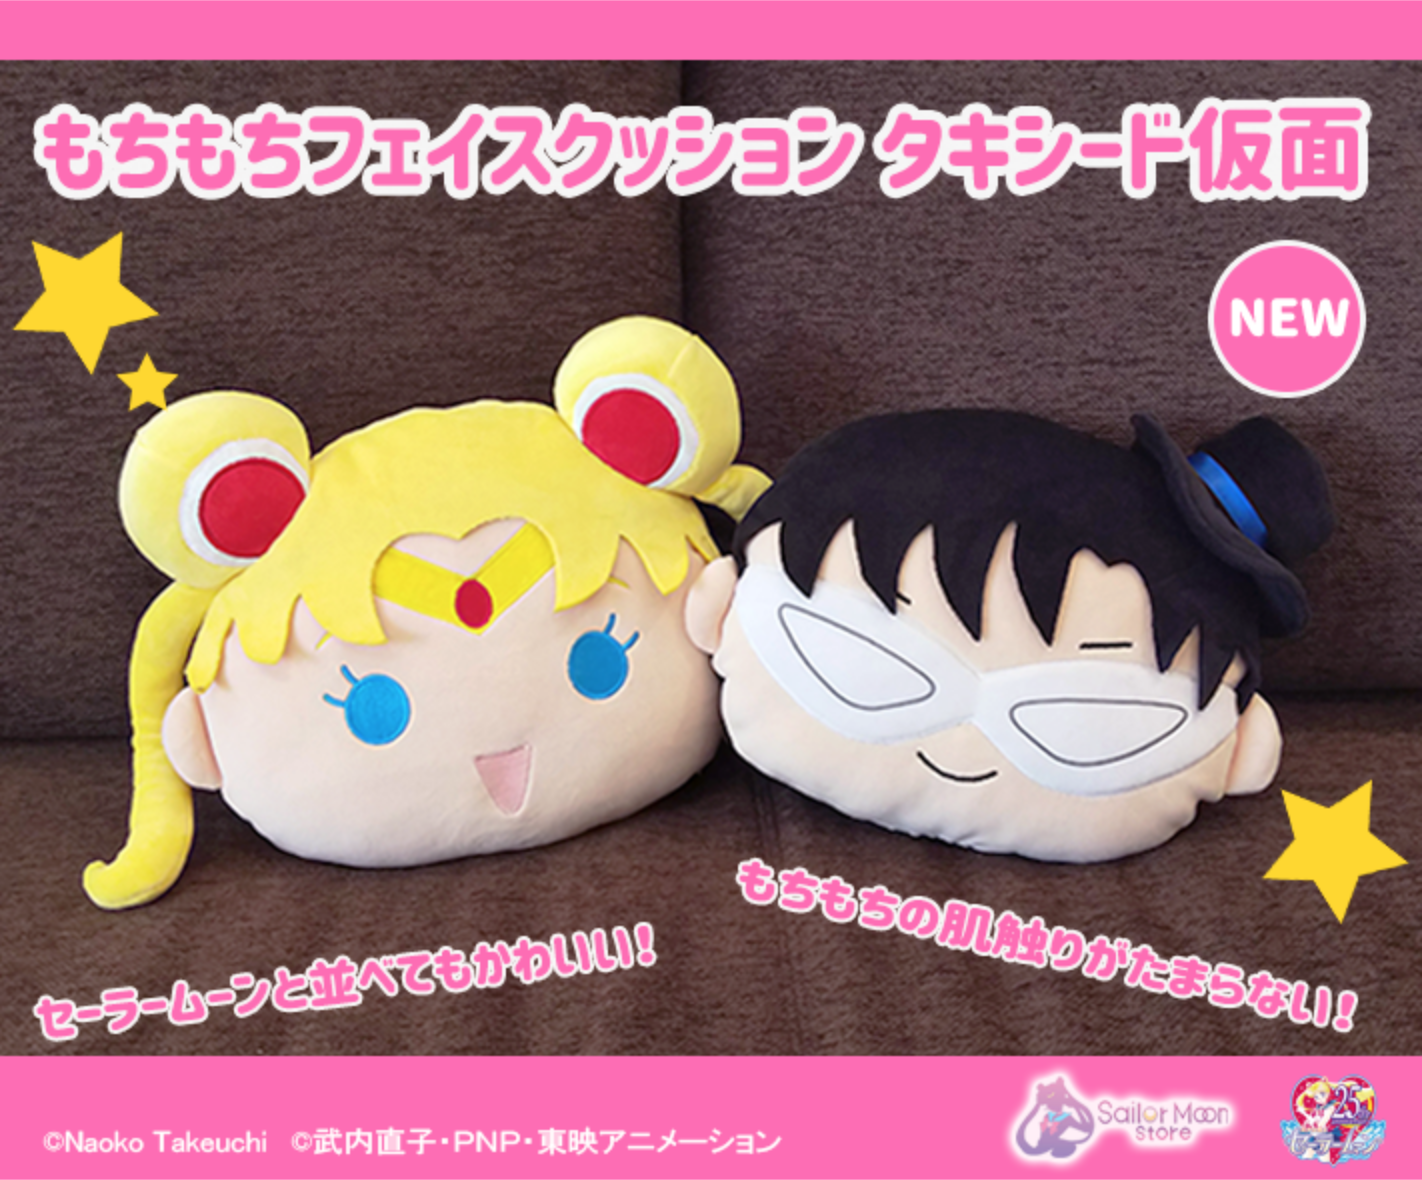 Sailor Moon Store Mochi Mochi Face Cushion Moon & Tuxedo Mask